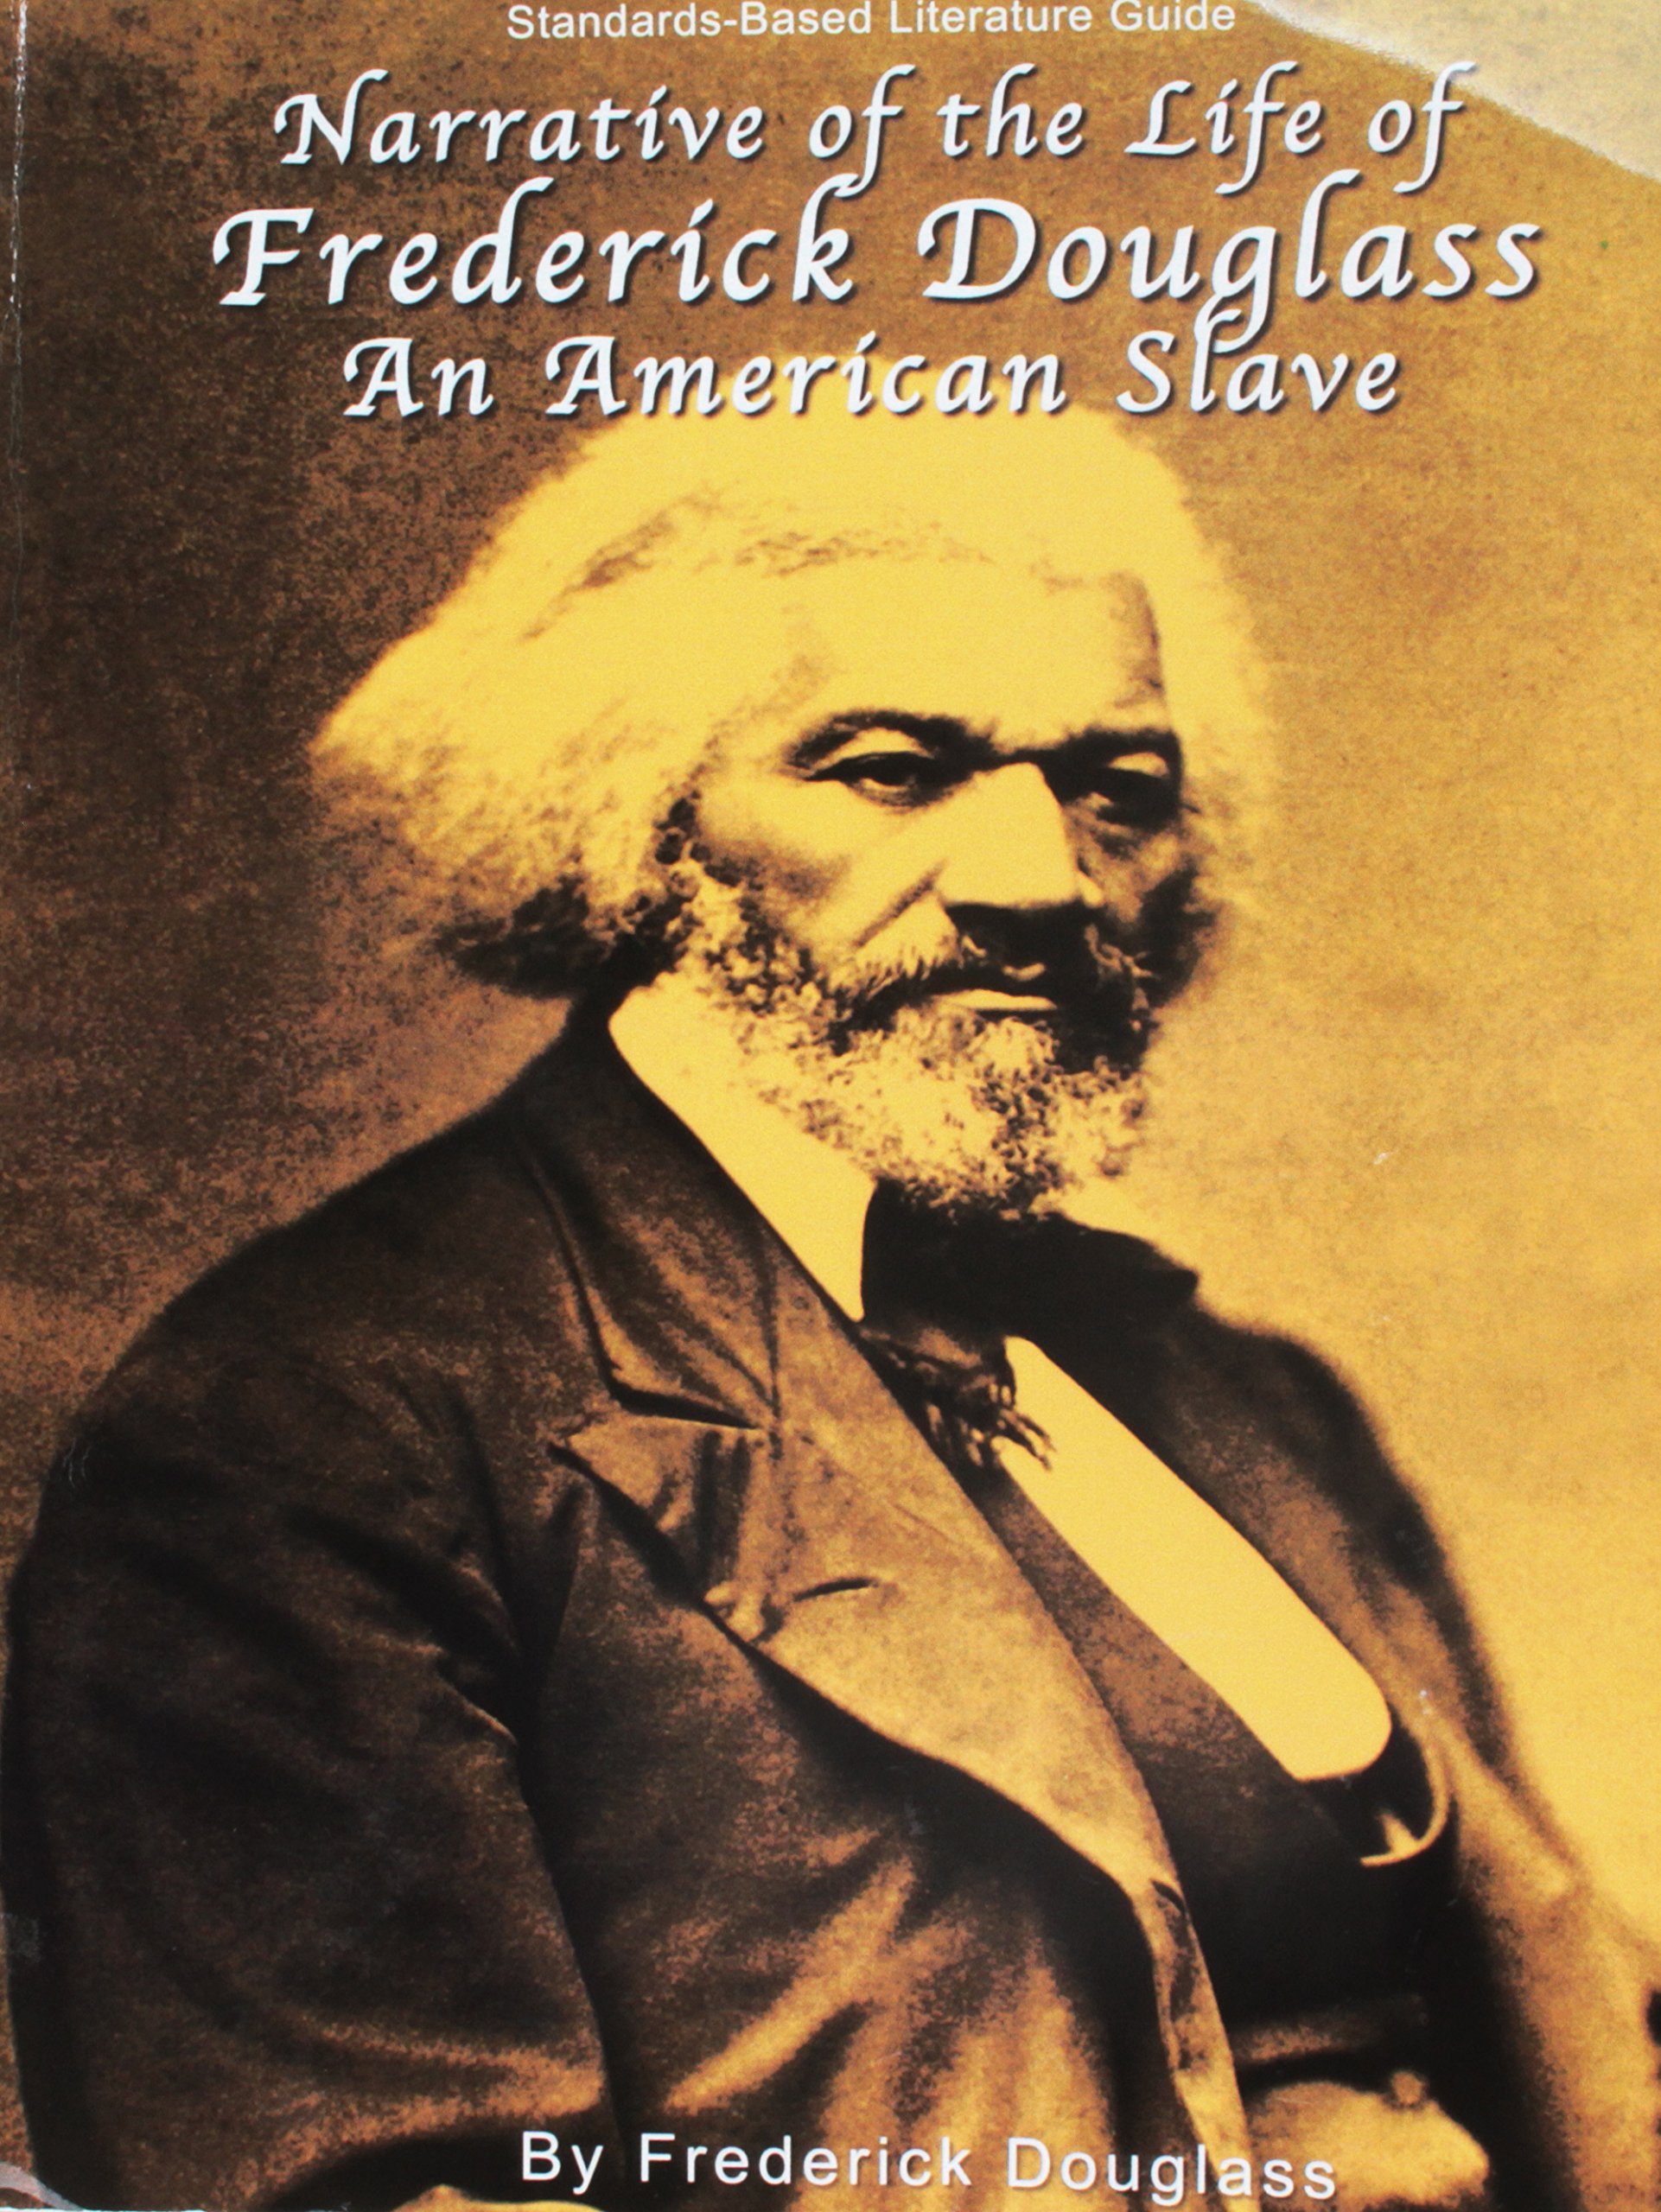 Narrative of the Life of Frederick Douglass Common Core Aligned Literature Guide